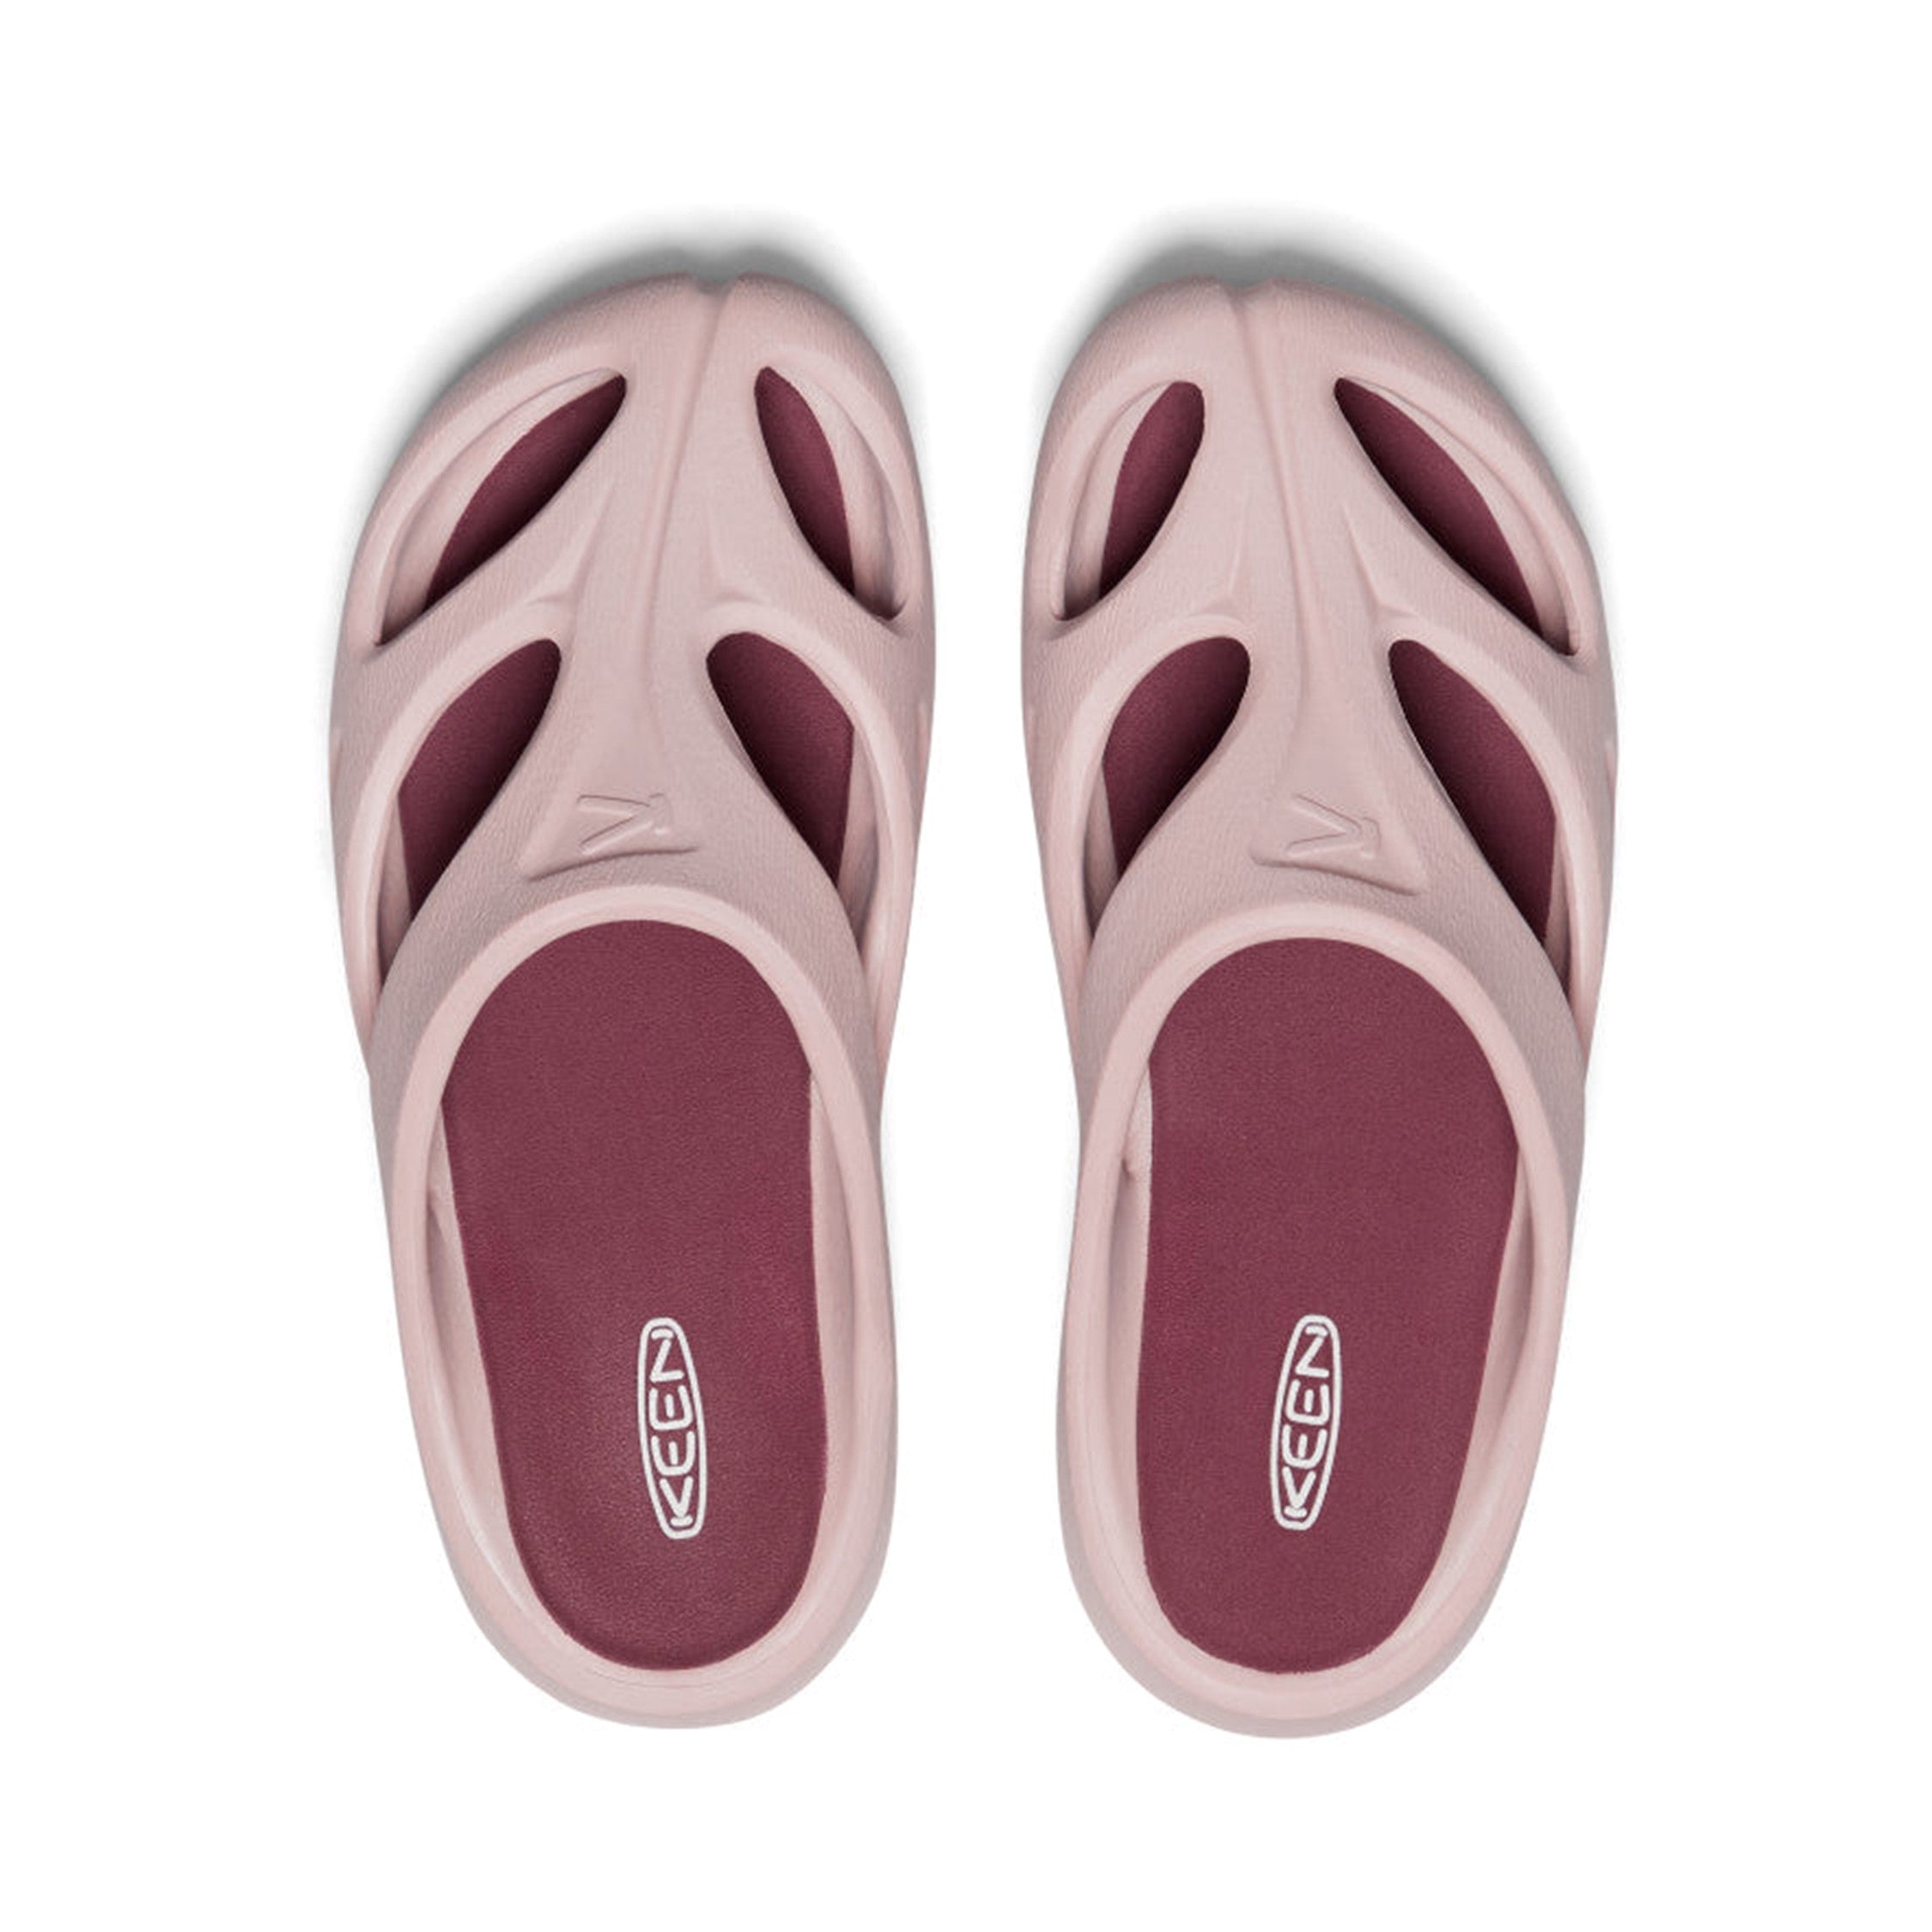 Shanti Women's Slip-on Clog Shoes - Fawn/Merlot